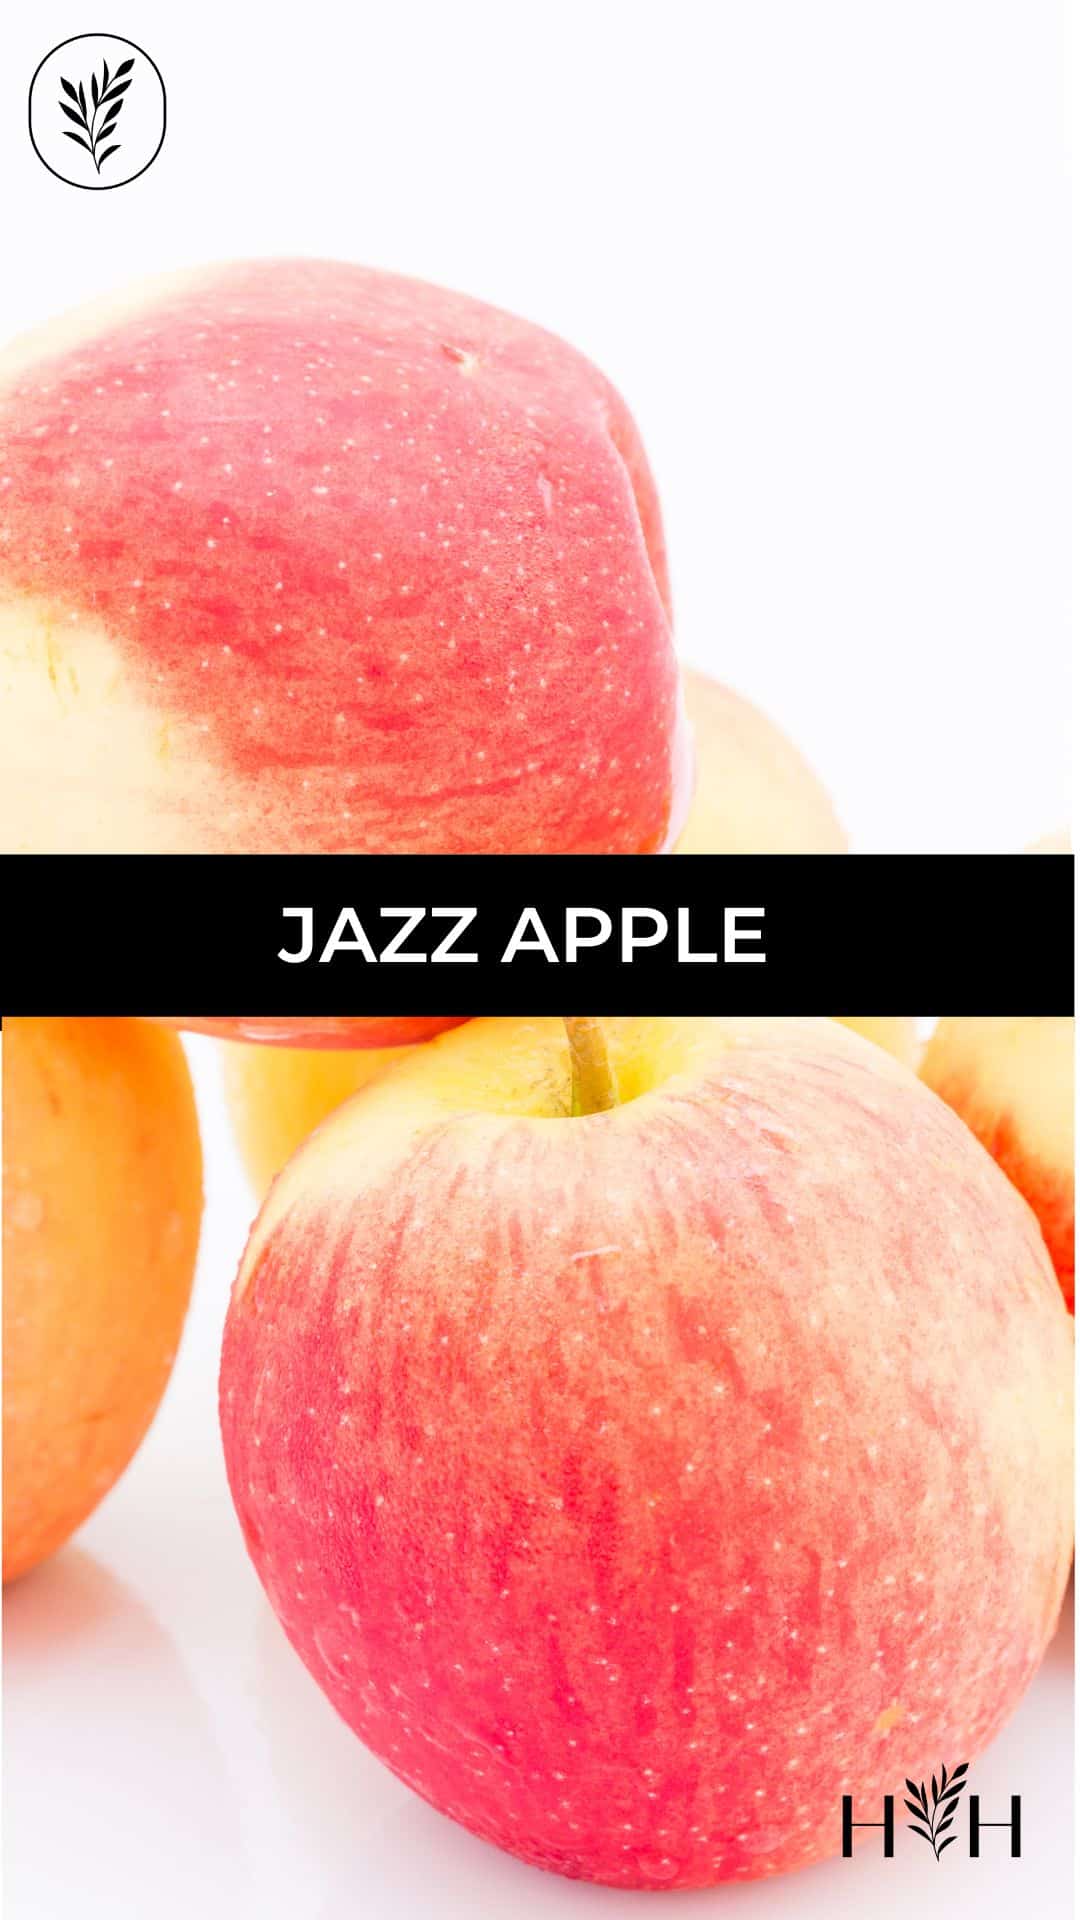 Jazz apple via @home4theharvest